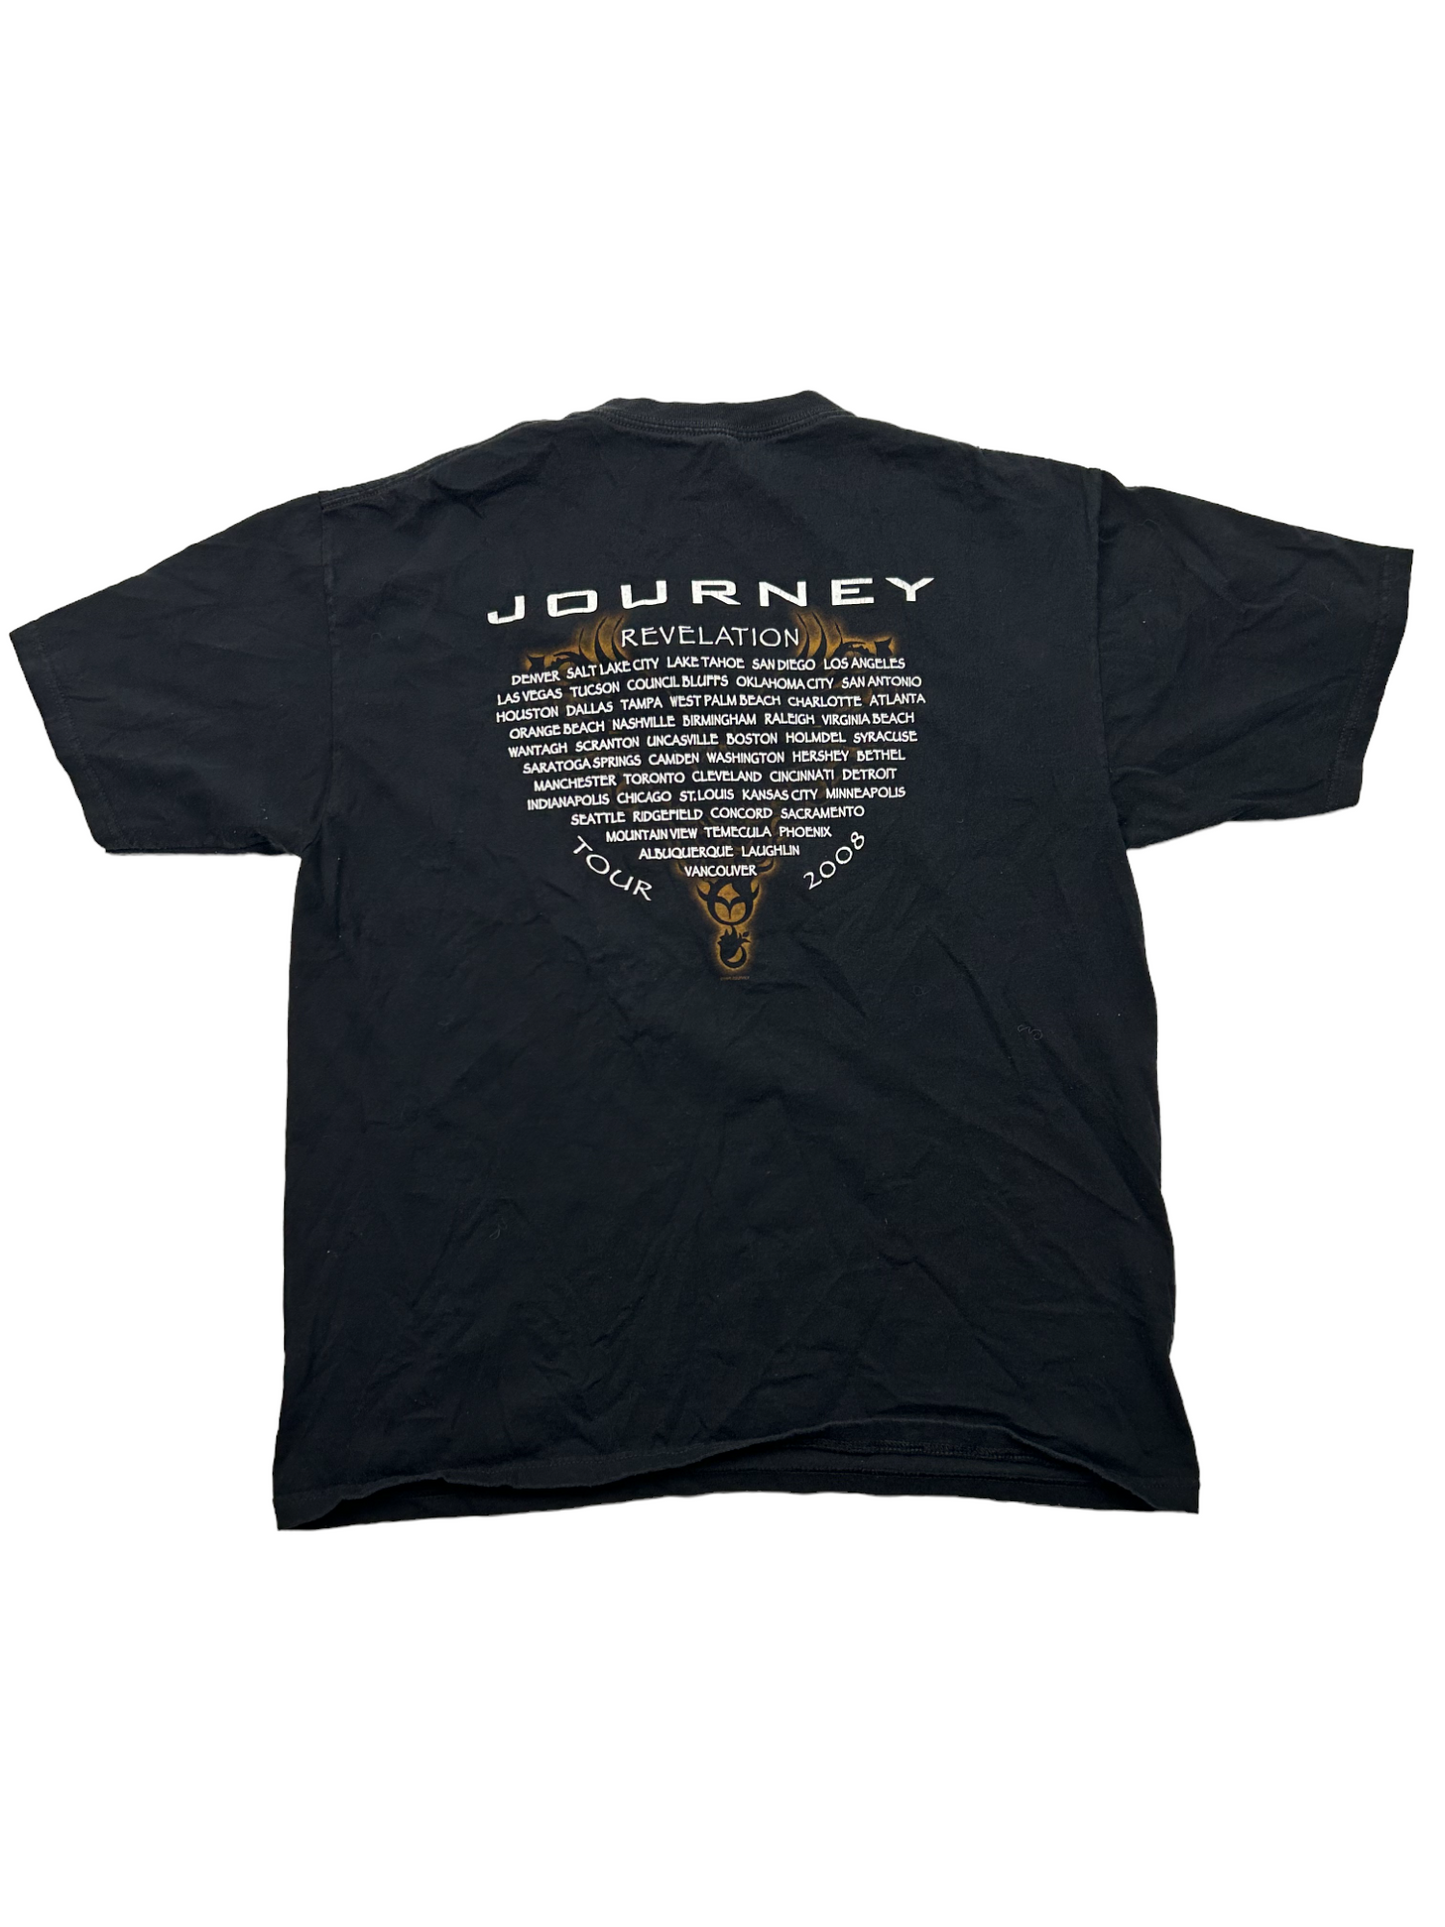 Journey Revelation Tour T-Shirt